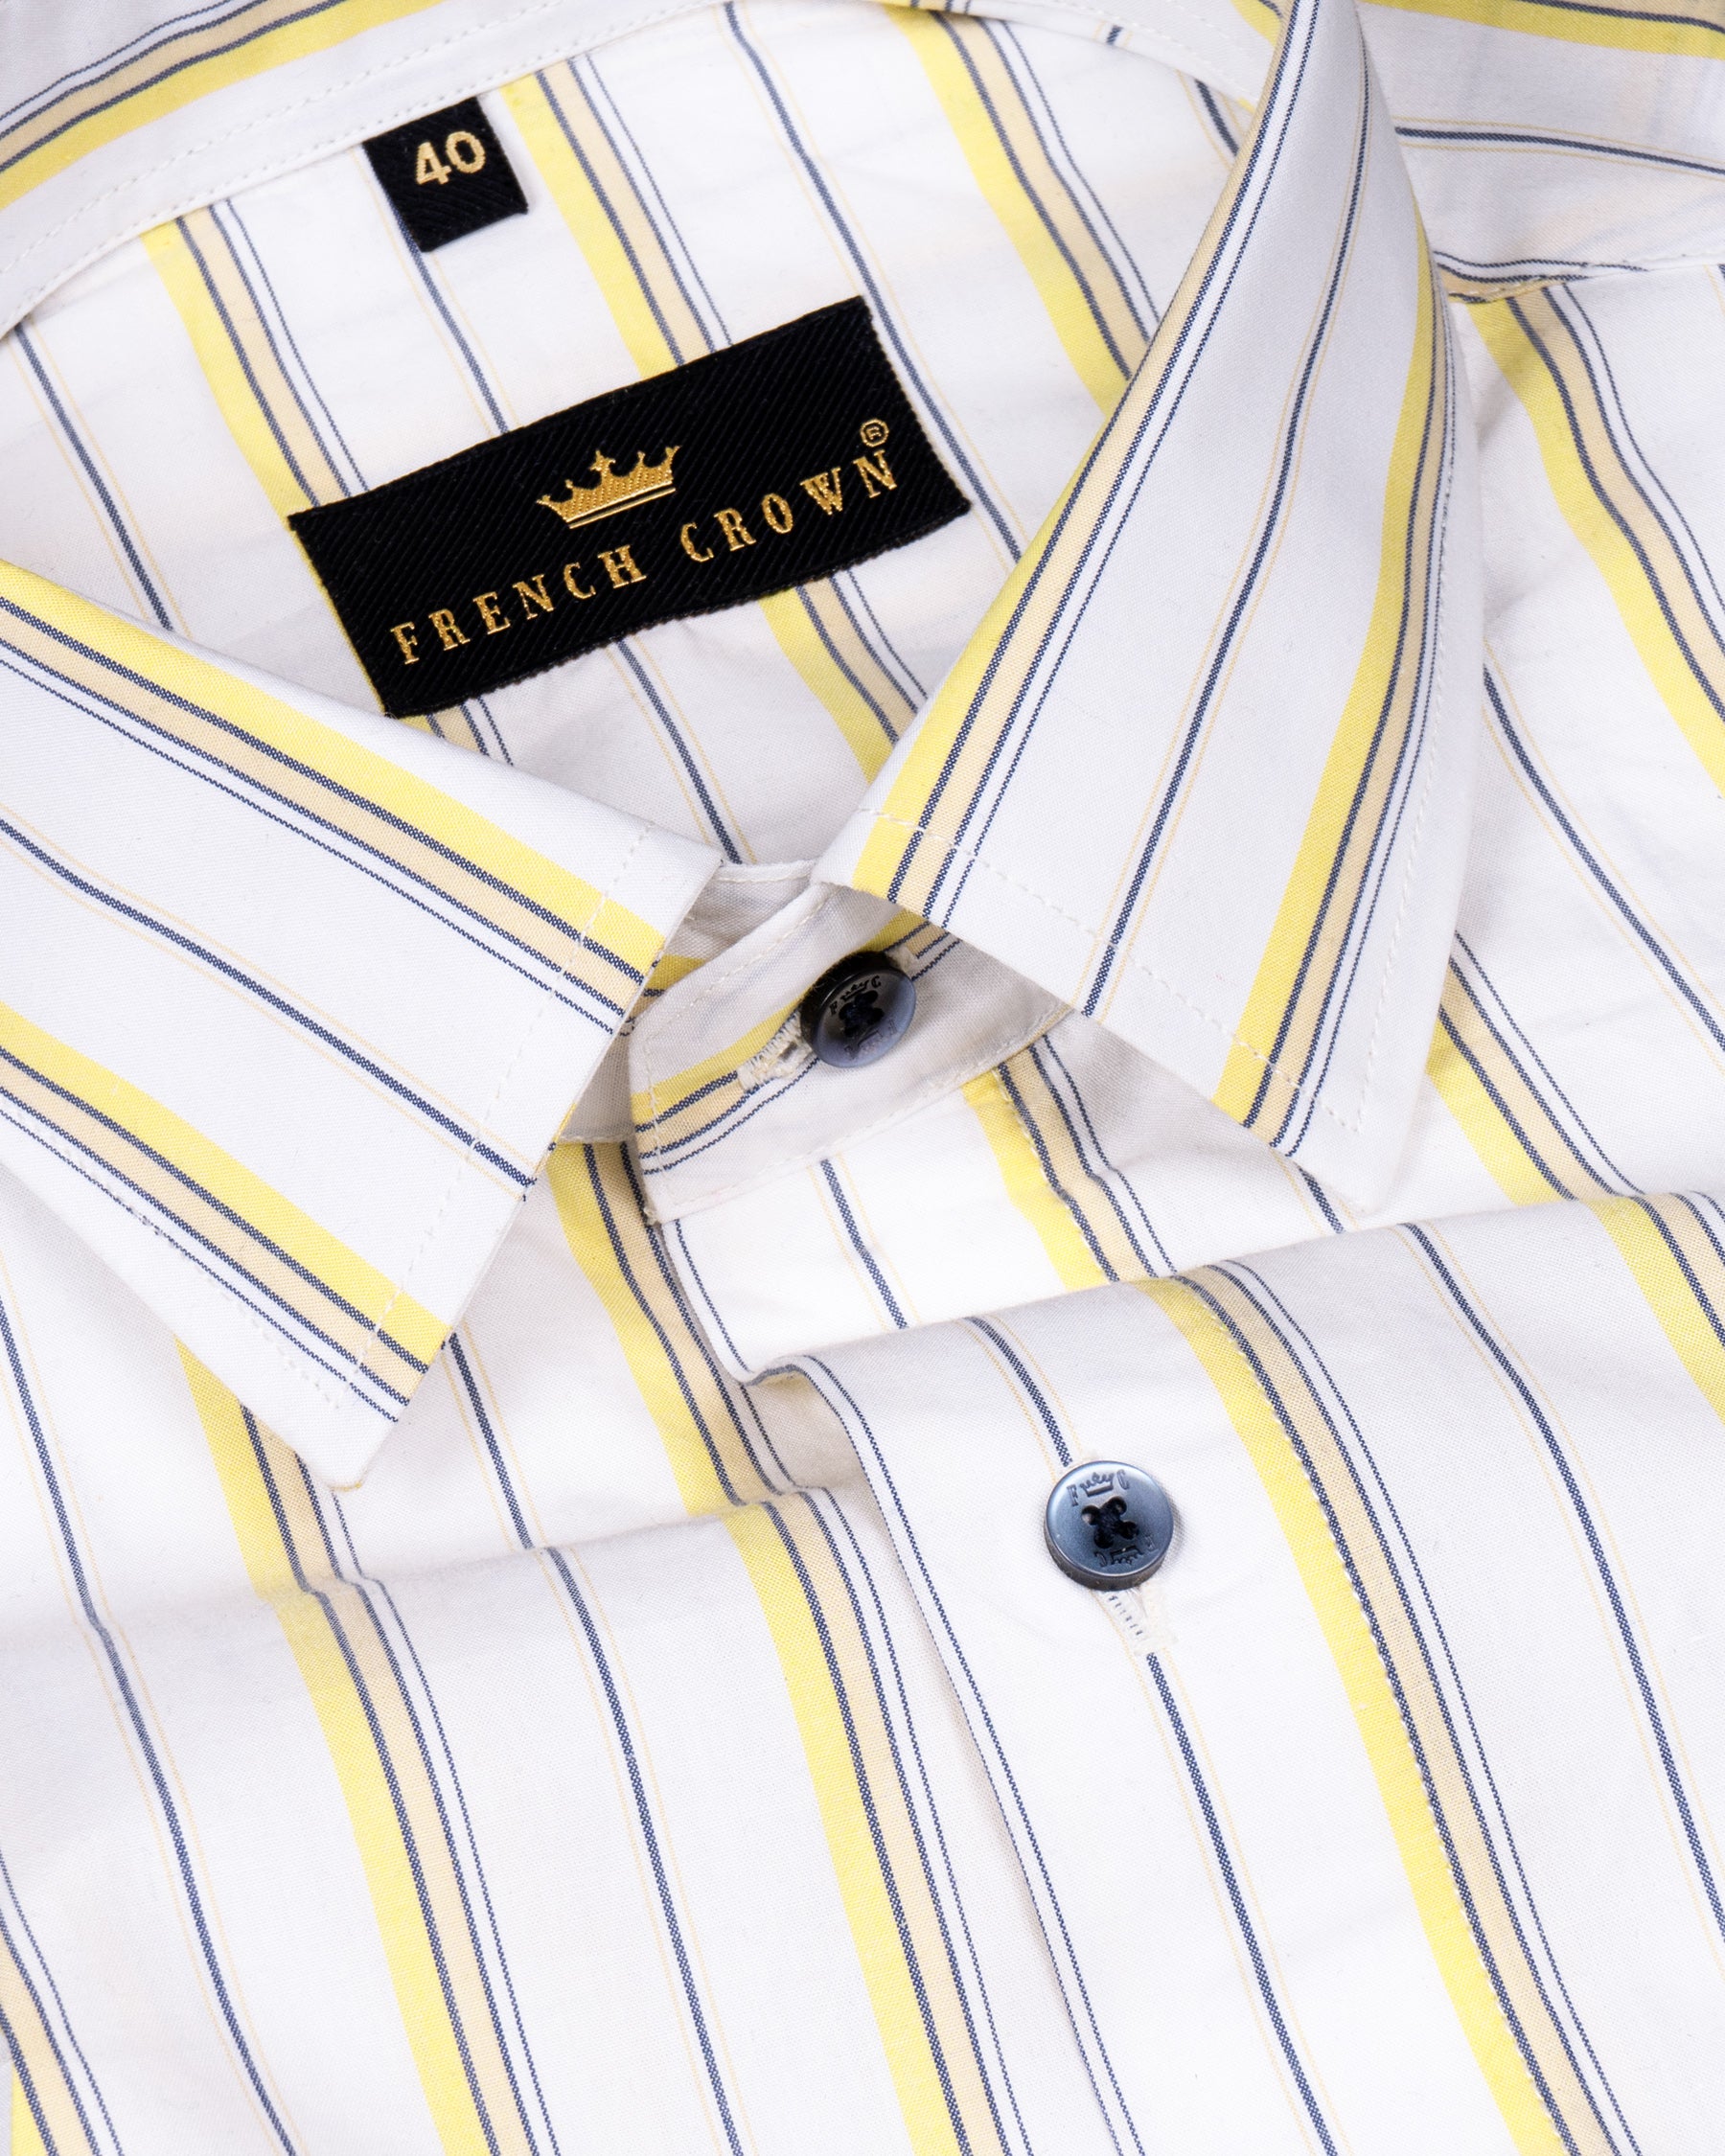 White Striped Premium Cotton Shirt 4601-BLE-38, 4601-BLE-H-38, 4601-BLE-39, 4601-BLE-H-39, 4601-BLE-40, 4601-BLE-H-40, 4601-BLE-42, 4601-BLE-H-52, 4601-BLE-H-42, 4601-BLE-44, 4601-BLE-H-44, 4601-BLE-46, 4601-BLE-H-46, 4601-BLE-48, 4601-BLE-H-48, 4601-BLE-50, 4601-BLE-H-50, 4601-BLE-52